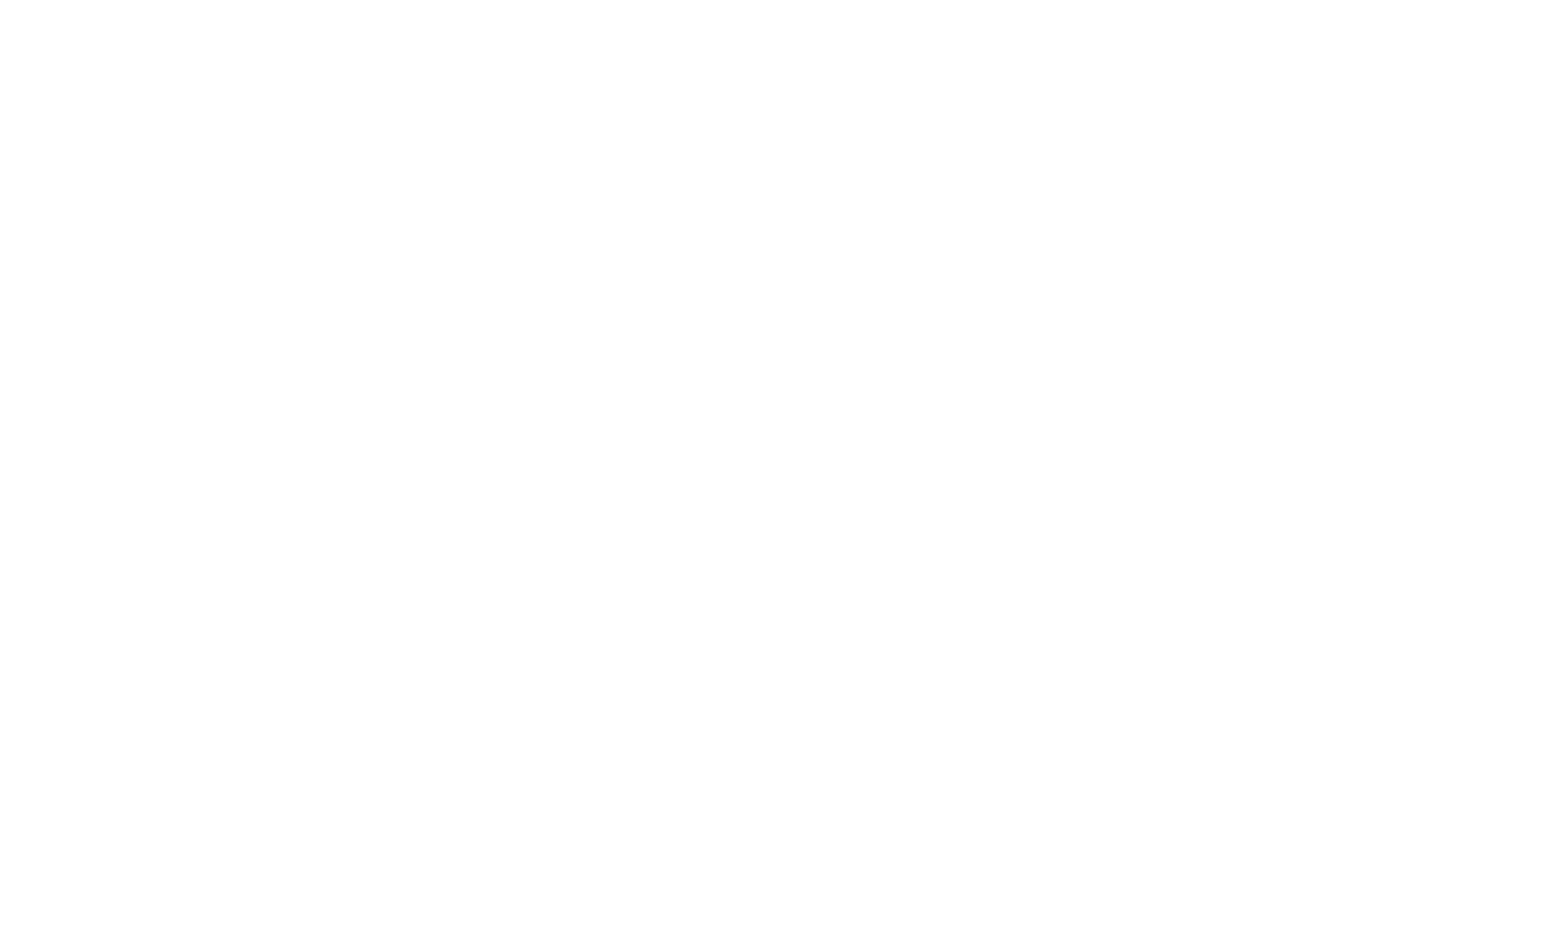 Georg Fischer logo pour fonds sombres (PNG transparent)